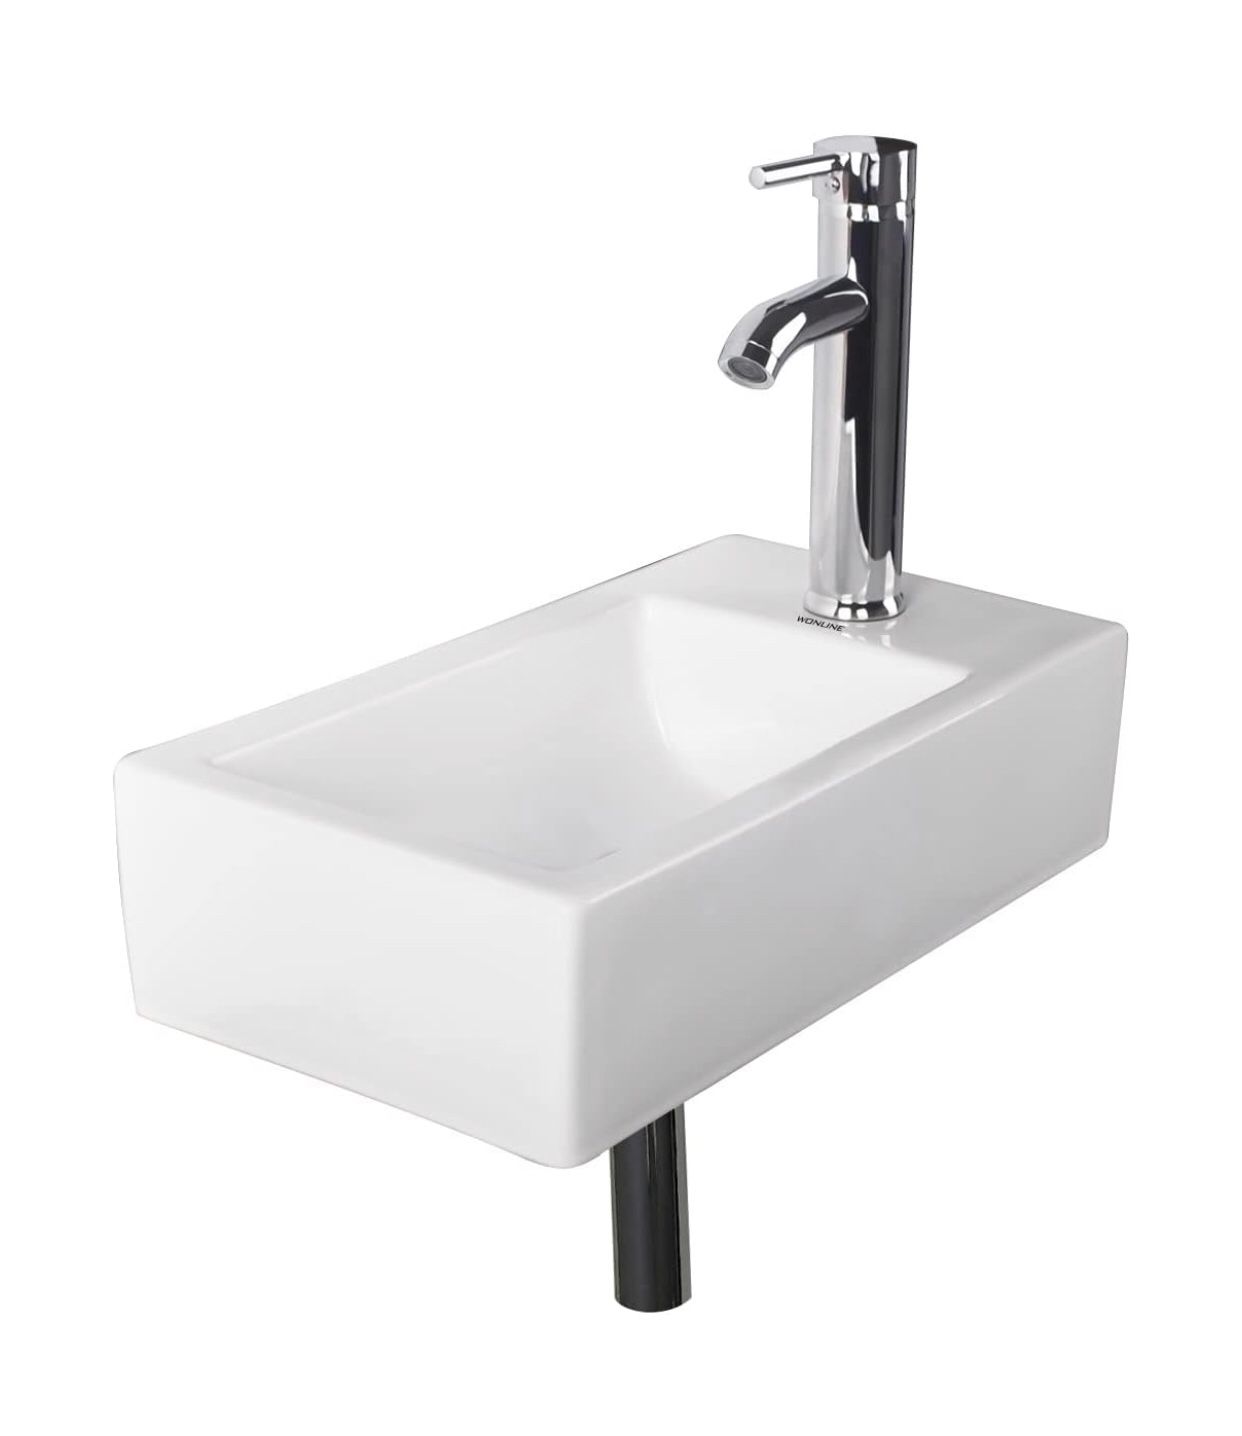 NEW! Walcut White Small RV Bathroom Sink, Wall Mount Vanity Corner Rectangle Porcelain